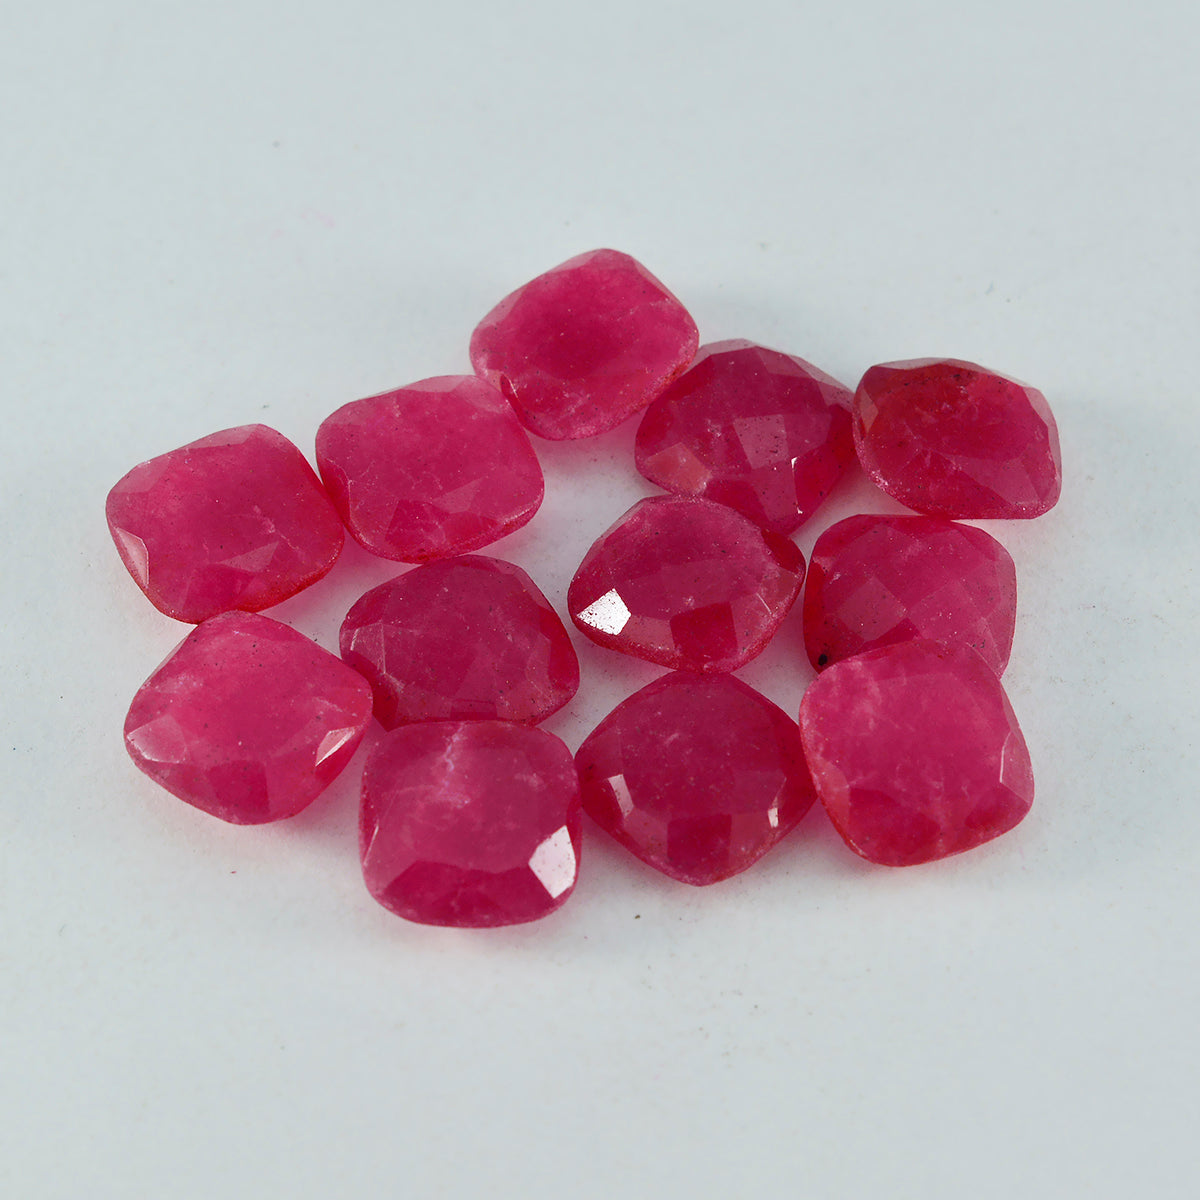 Riyogems 1PC natuurlijke rode jaspis gefacetteerd 5x5 mm kussenvorm verrassende kwaliteit losse edelsteen